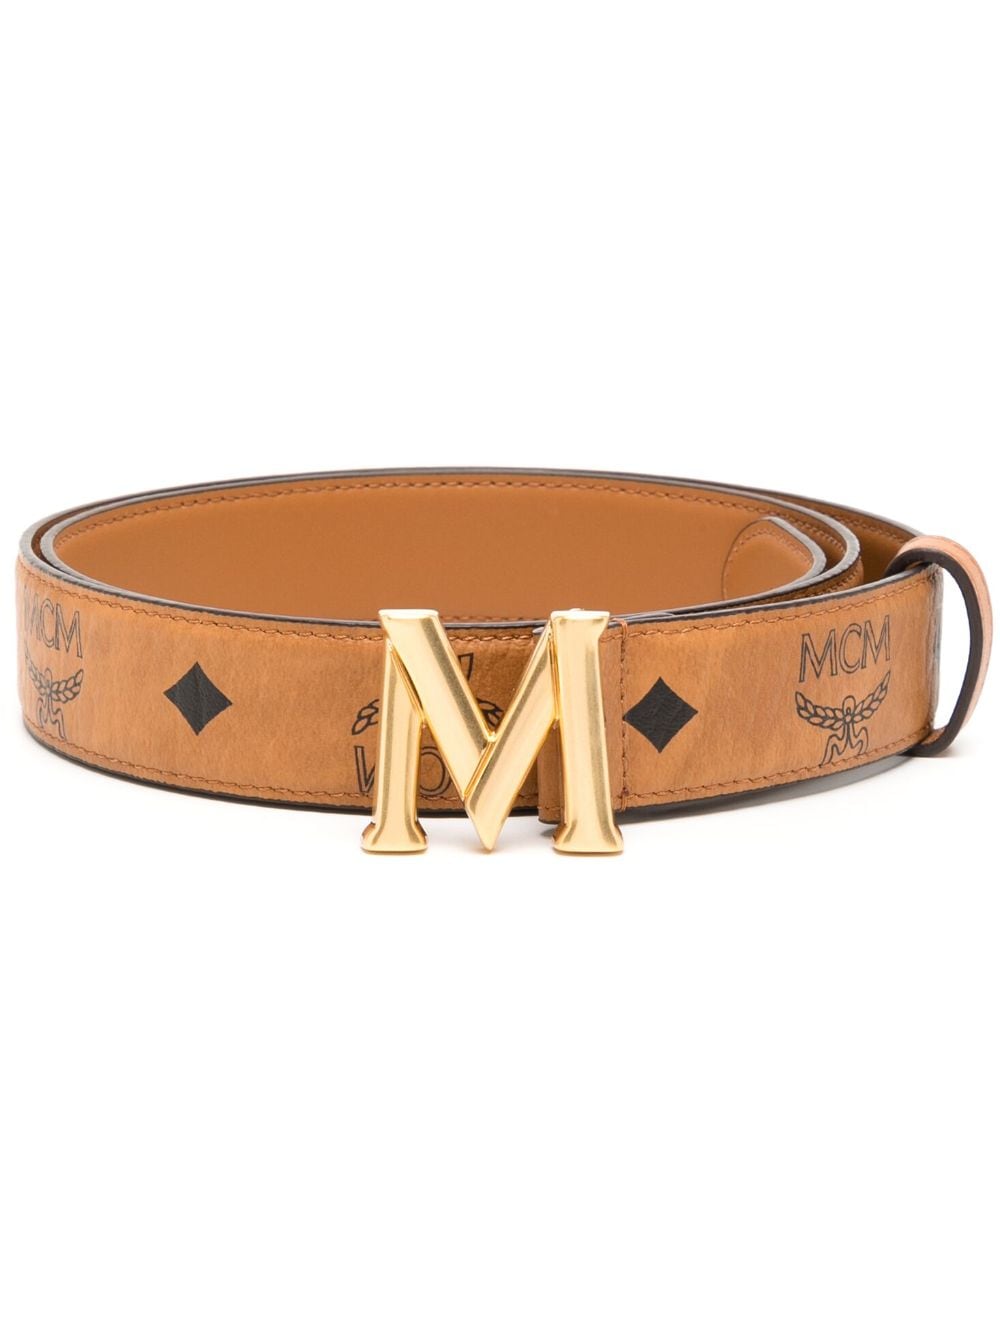 Mcm Claus M Reversible Belt In Brown